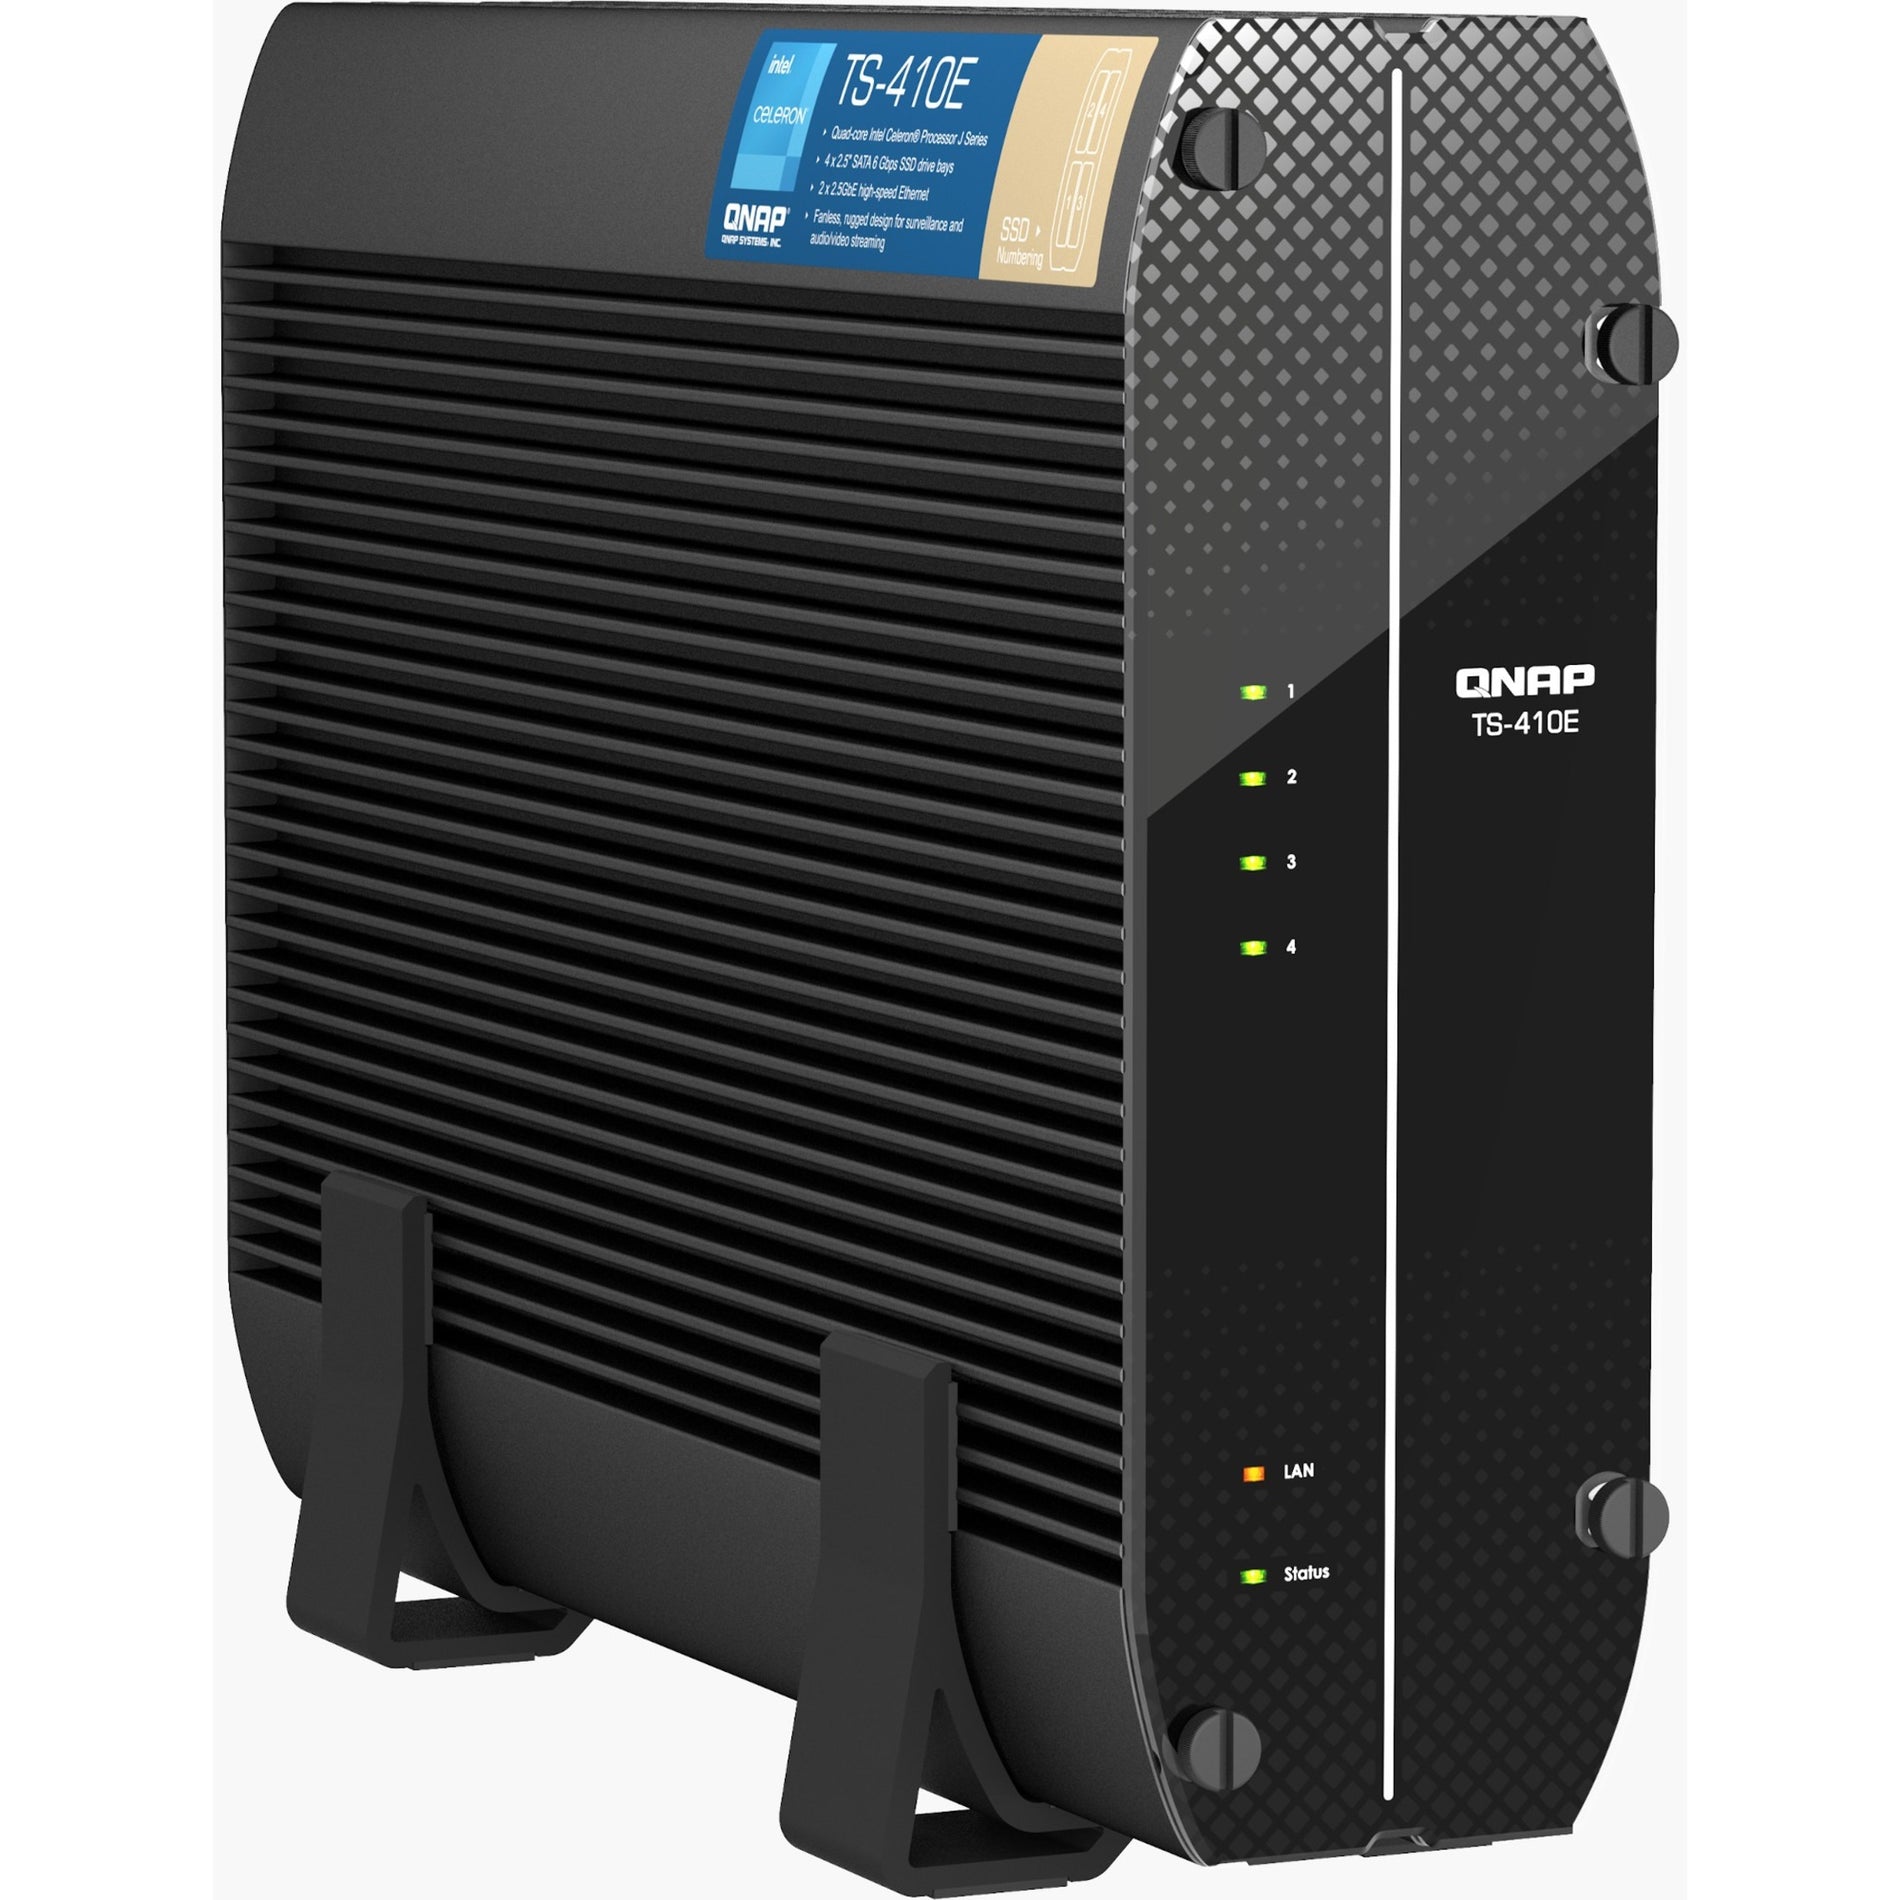 QNAP TS-410E-8G-US TS-410E-8G SAN/NAS Storage System, 8GB Memory, 4-Bay, QTS 5.0.0, 3-Year Warranty